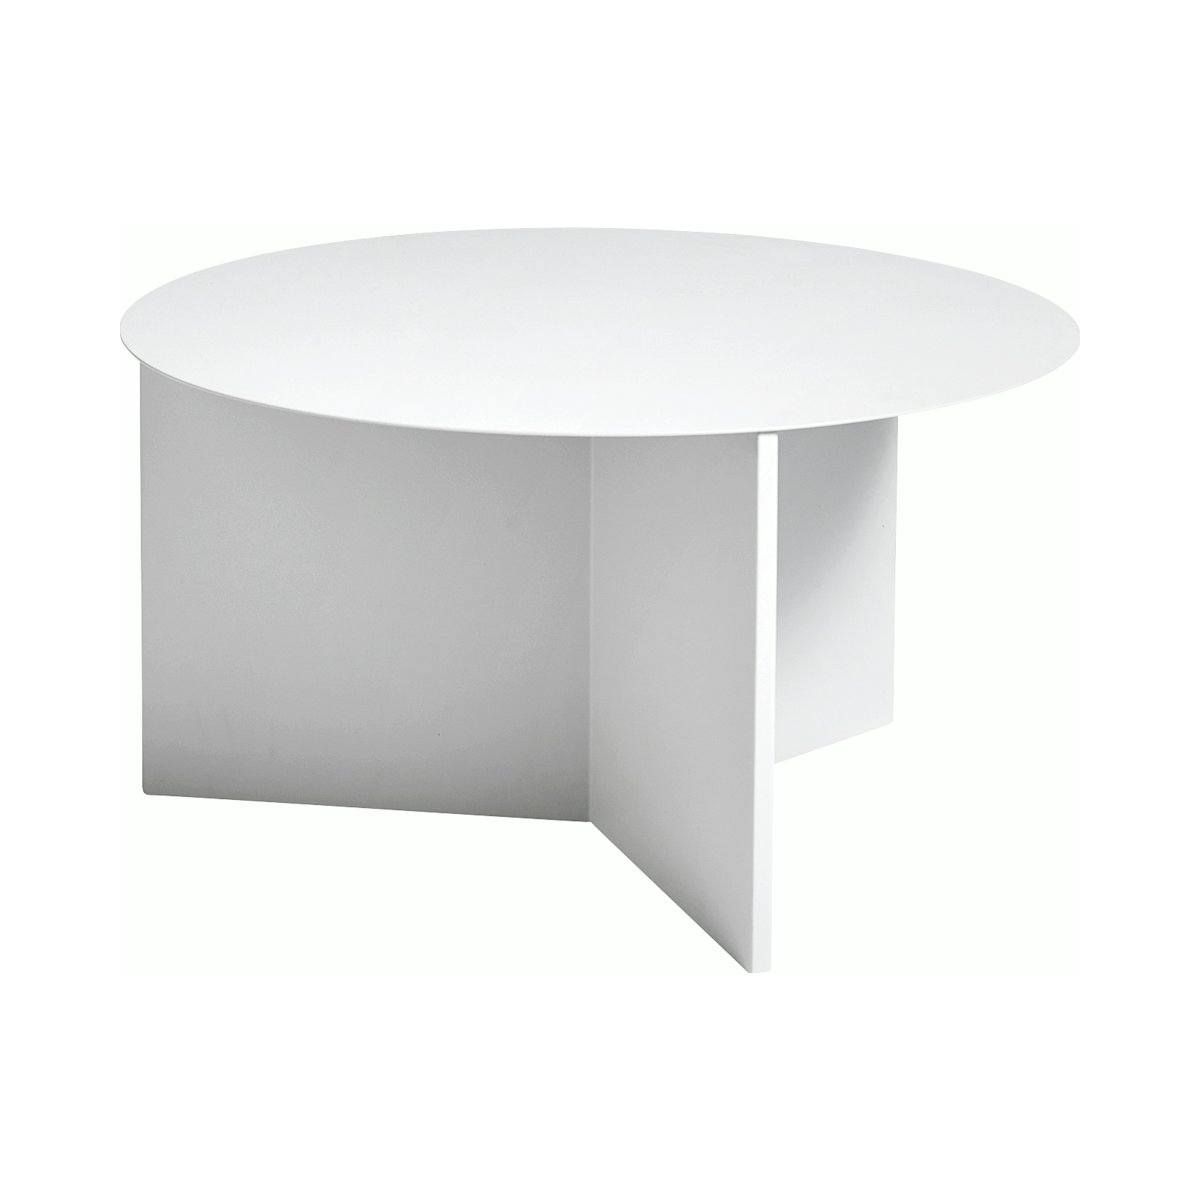 Slit Table, XL Coffee Table